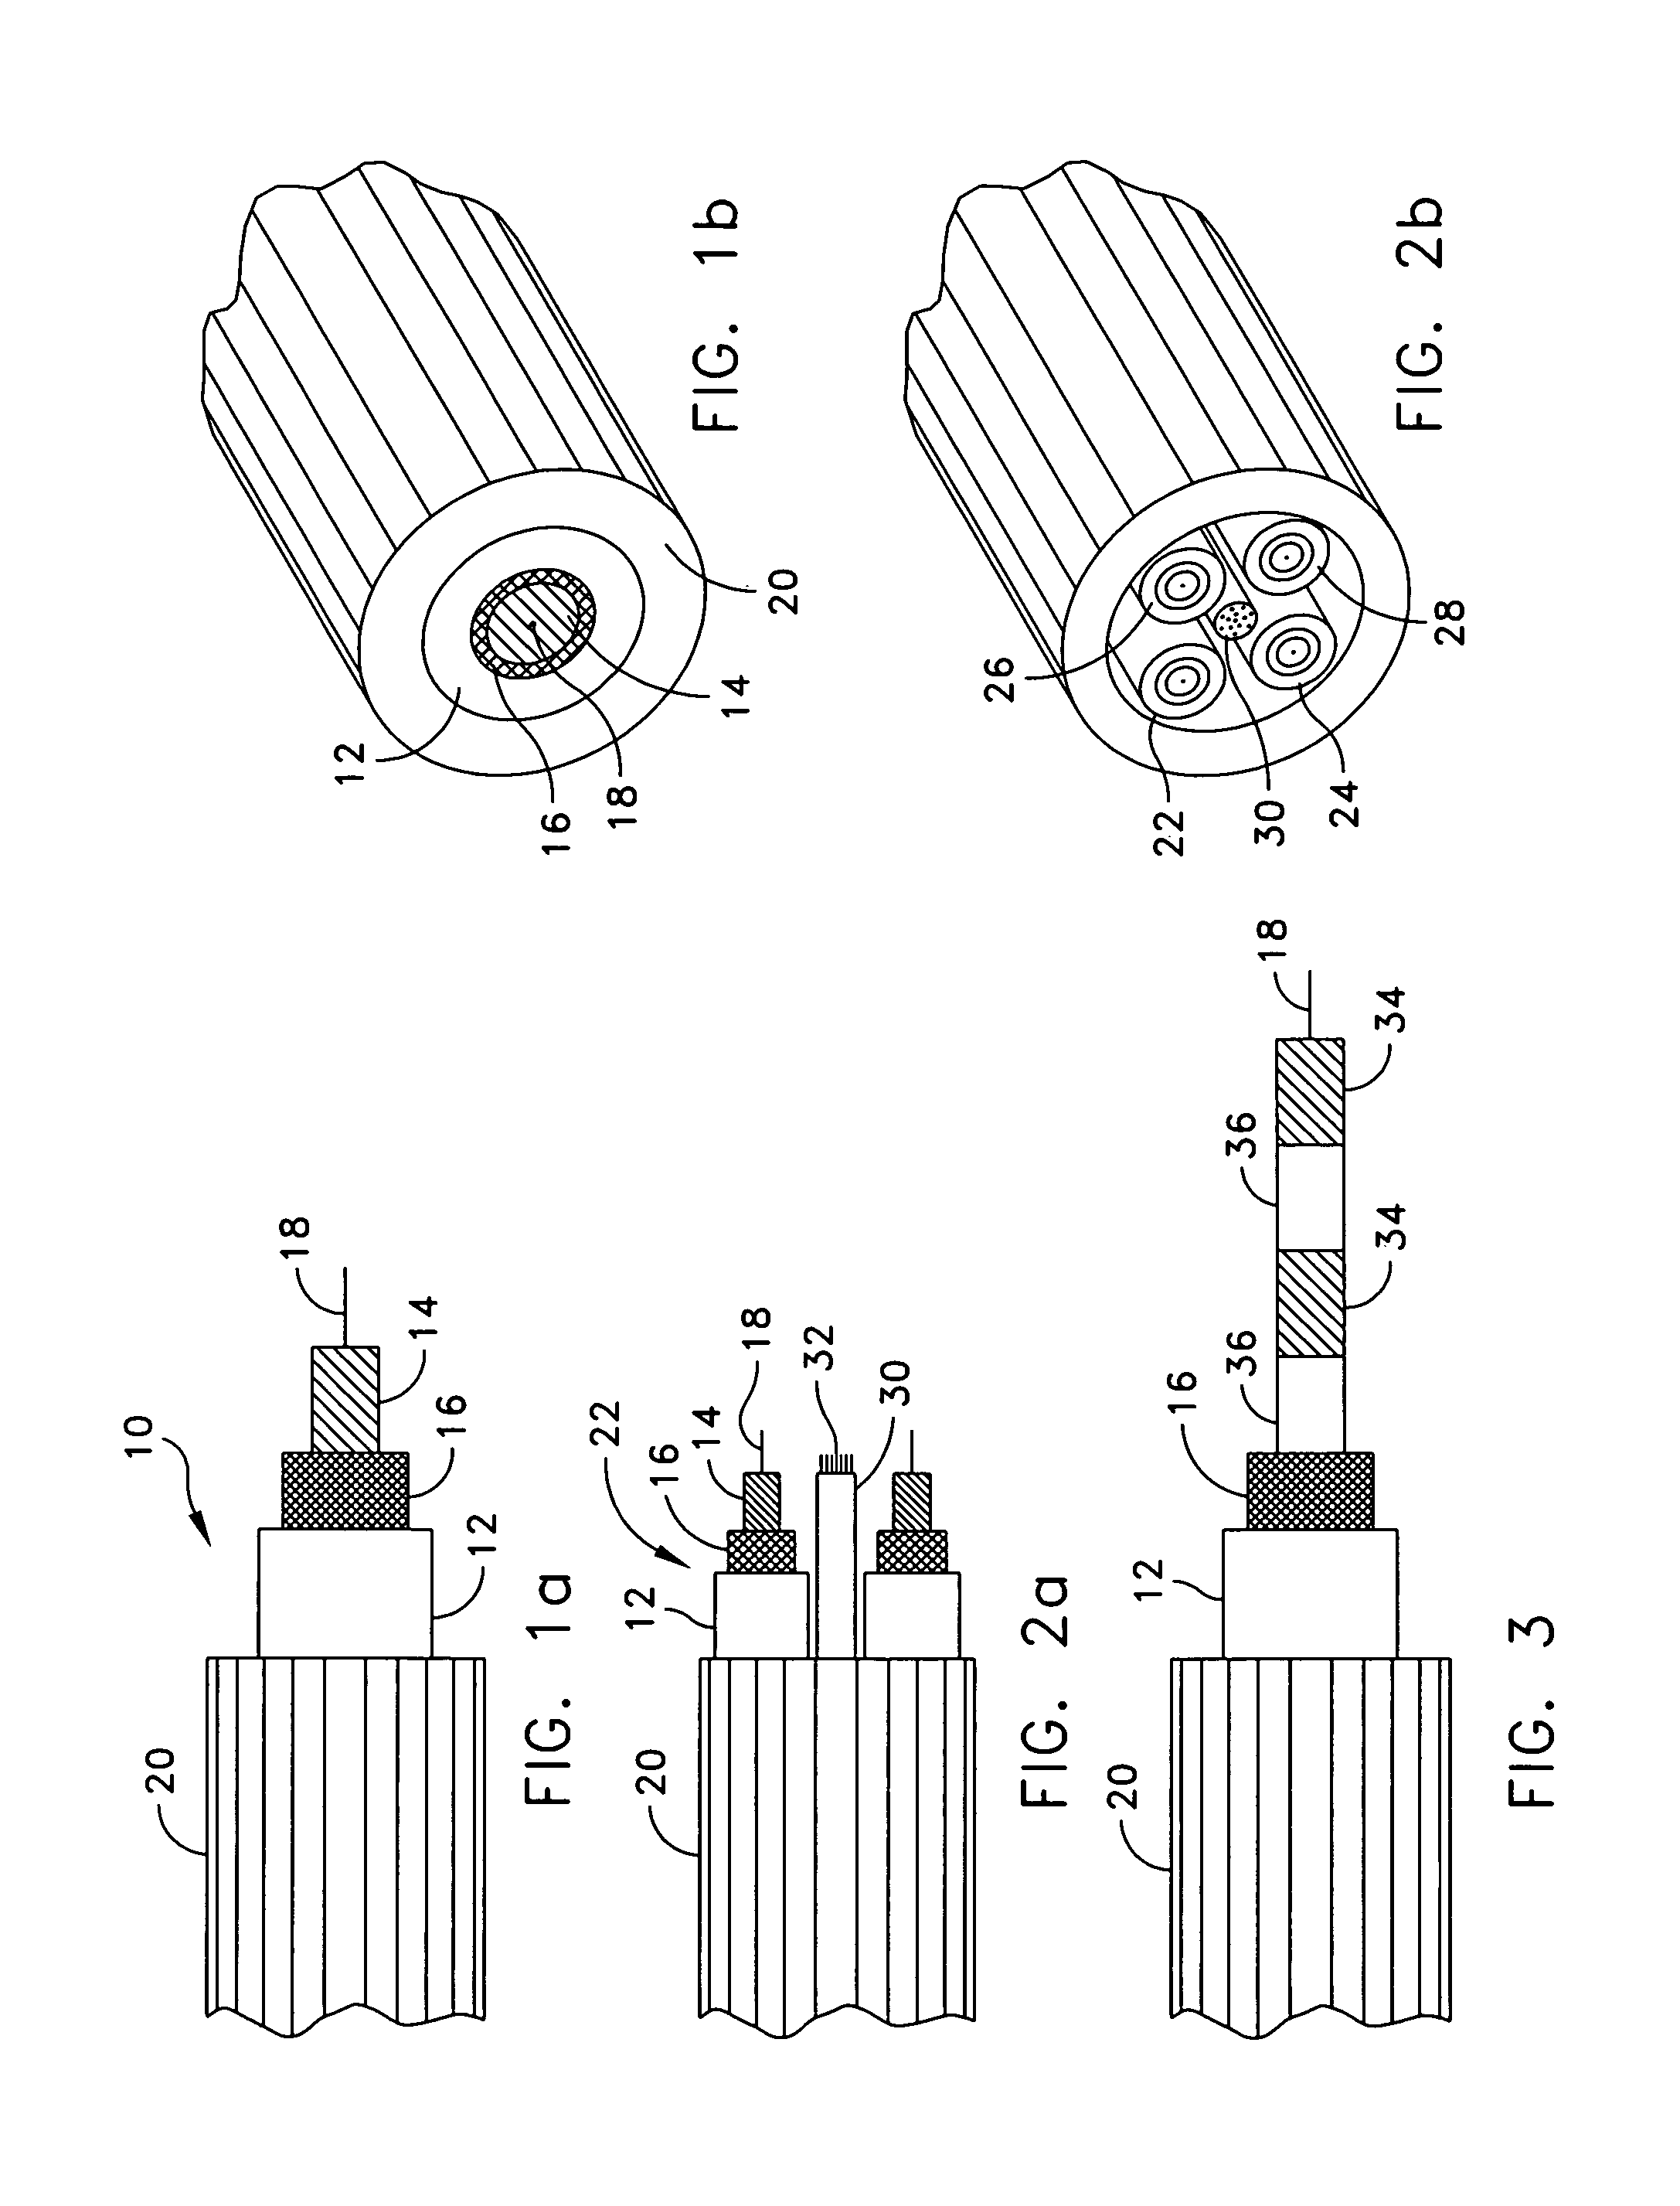 Coaxial transducer